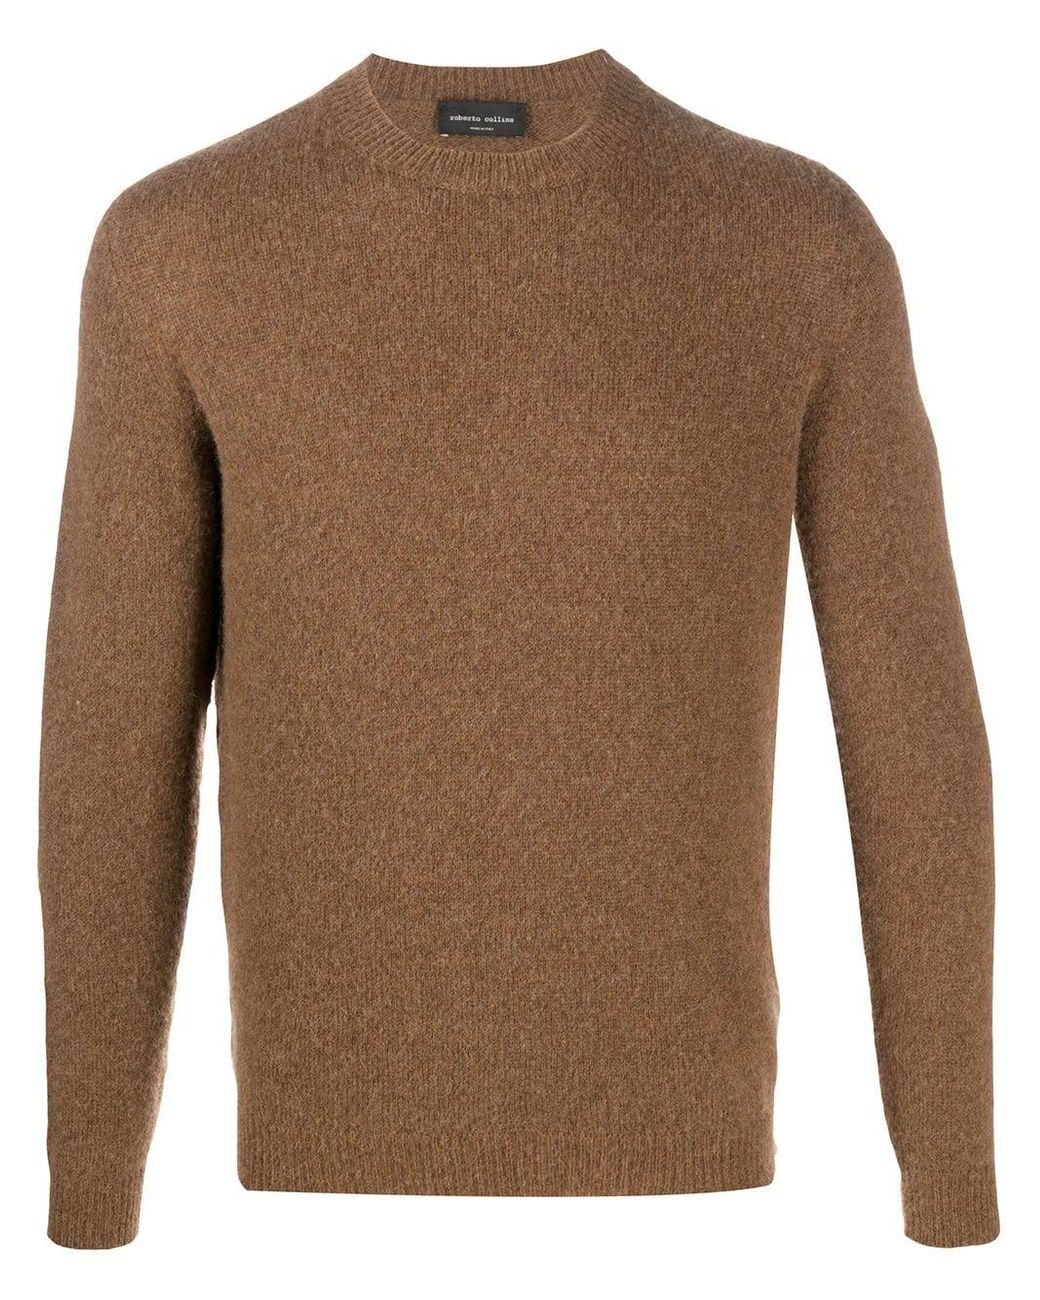 Roberto Collina Wool Crew Neck Sweater in Brown for Men - Lyst